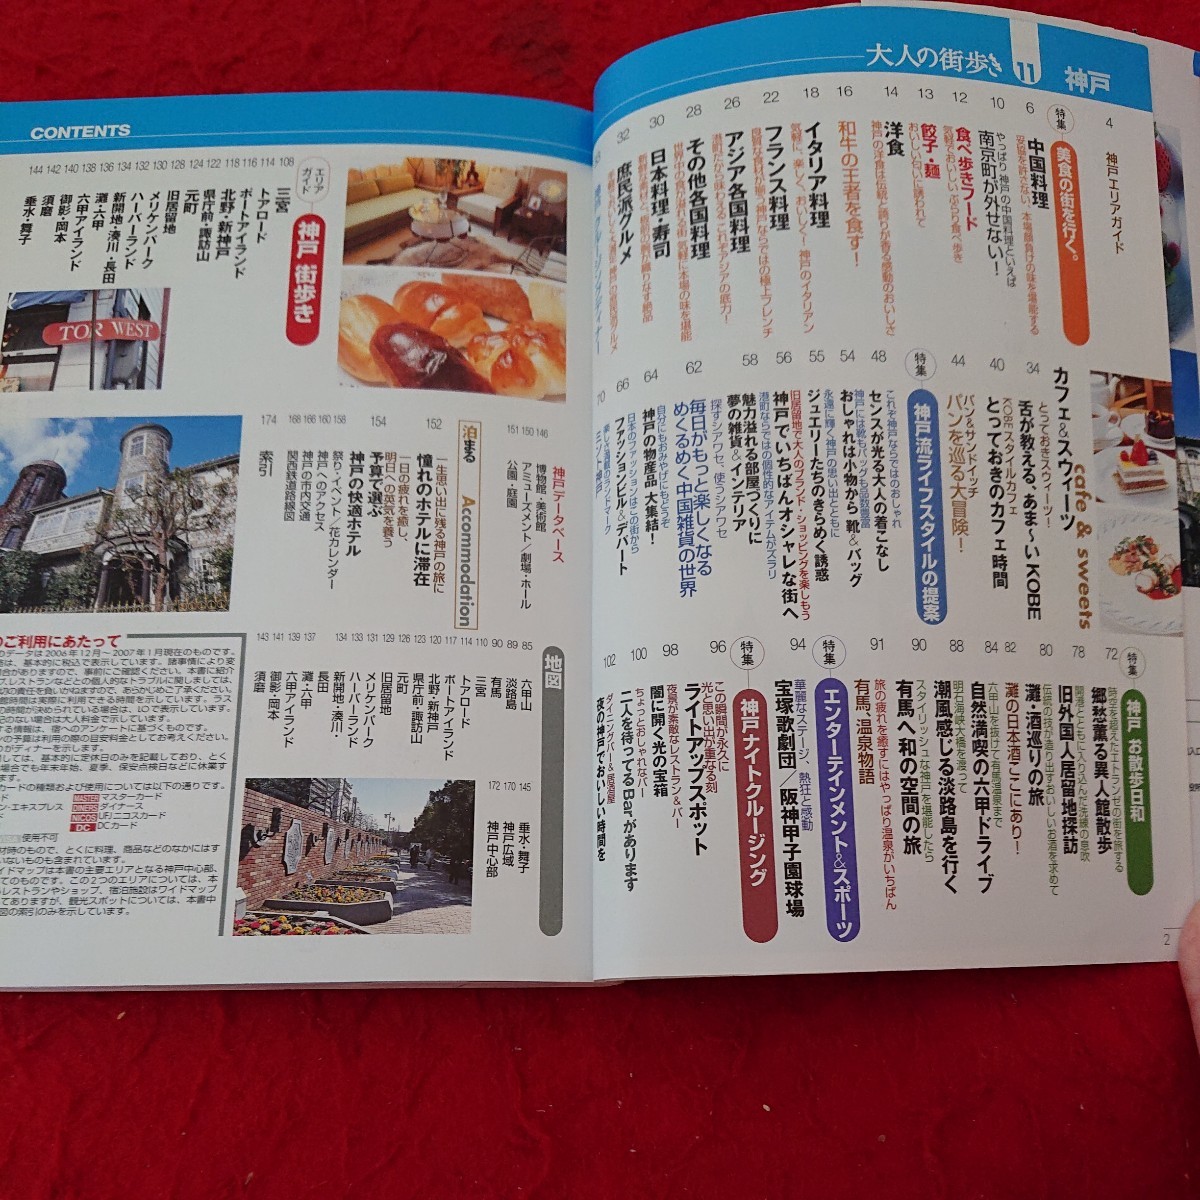 c-413 大人の街歩き 11 神戸 あなただけの旅がここにある 美しい日本に、会いに行く 成美堂出版 2007年発行 書き込み多数※6 _画像7